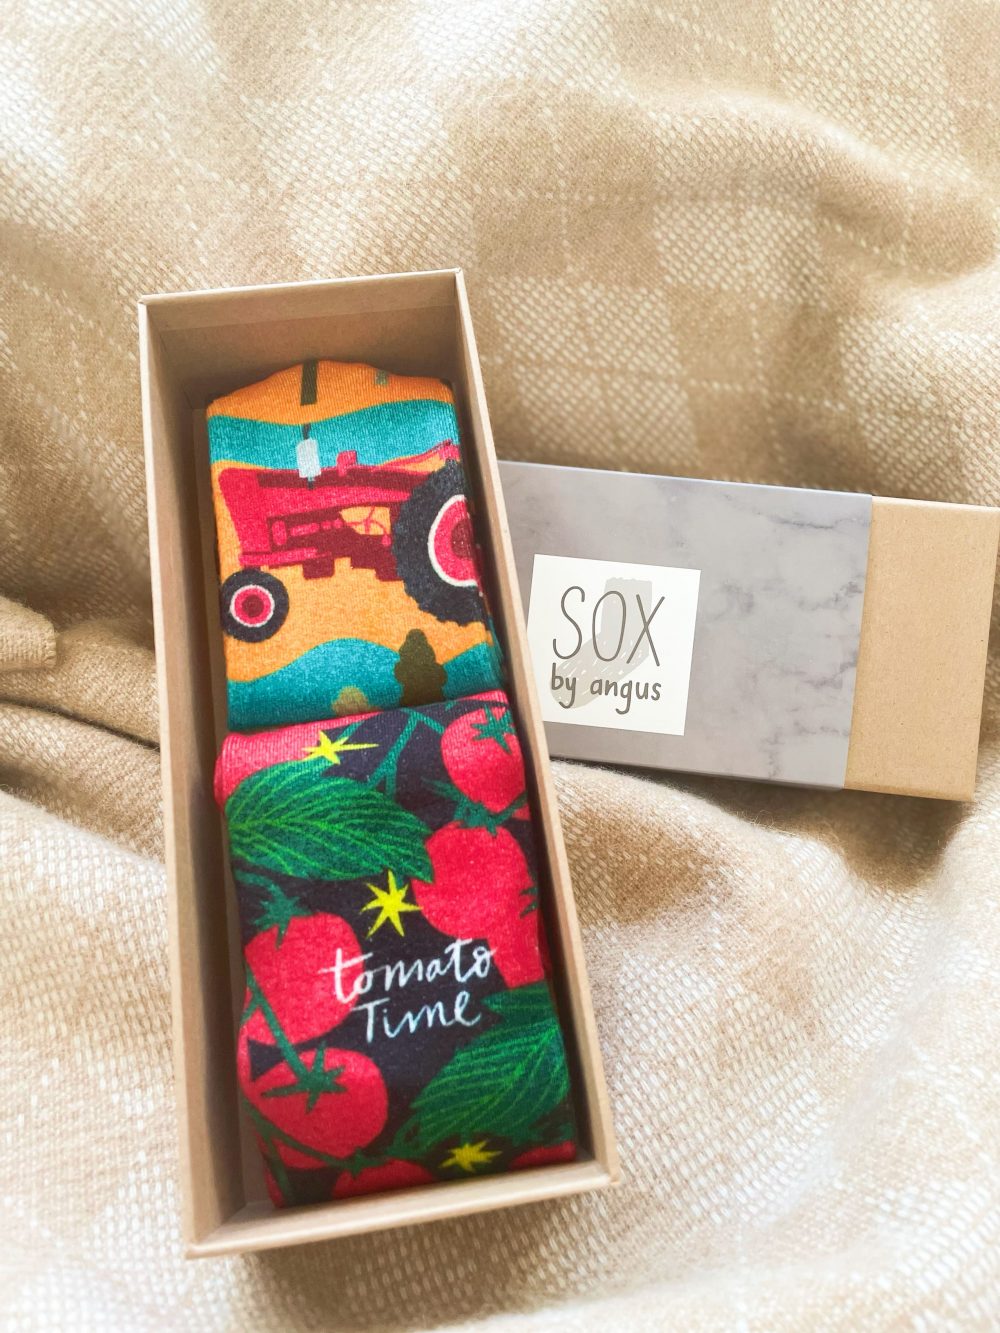 bamboo digital printing novelty socks gift box of Hayride & Tomato socks